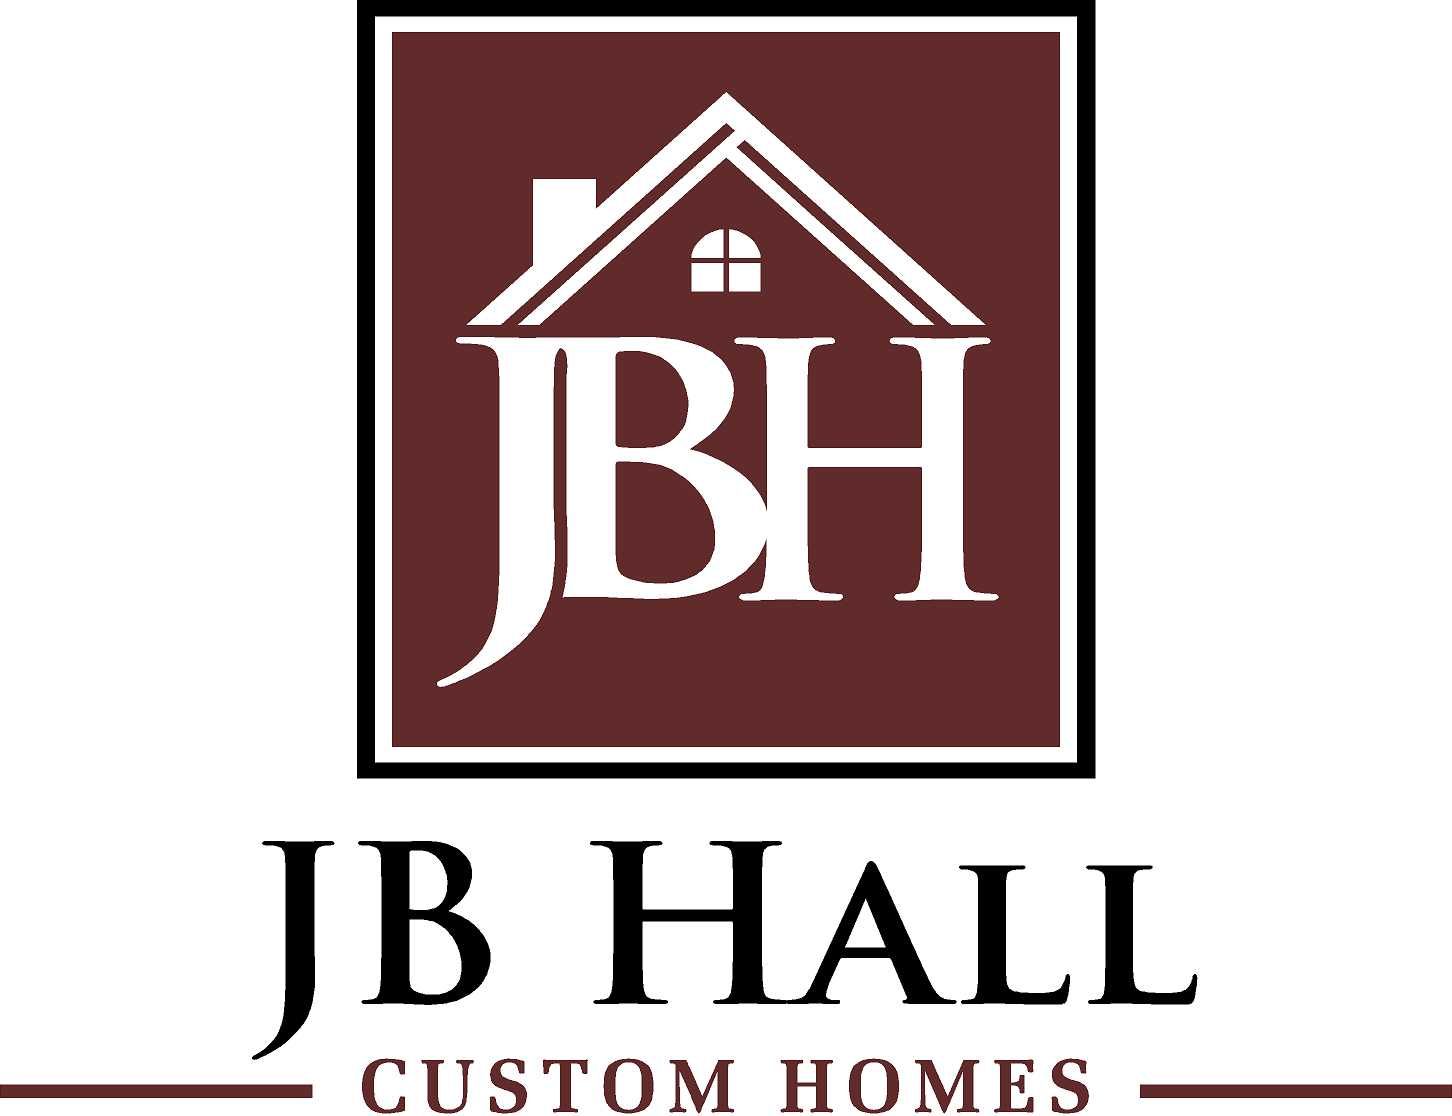 A logo for jb hall custom homes with a house on it